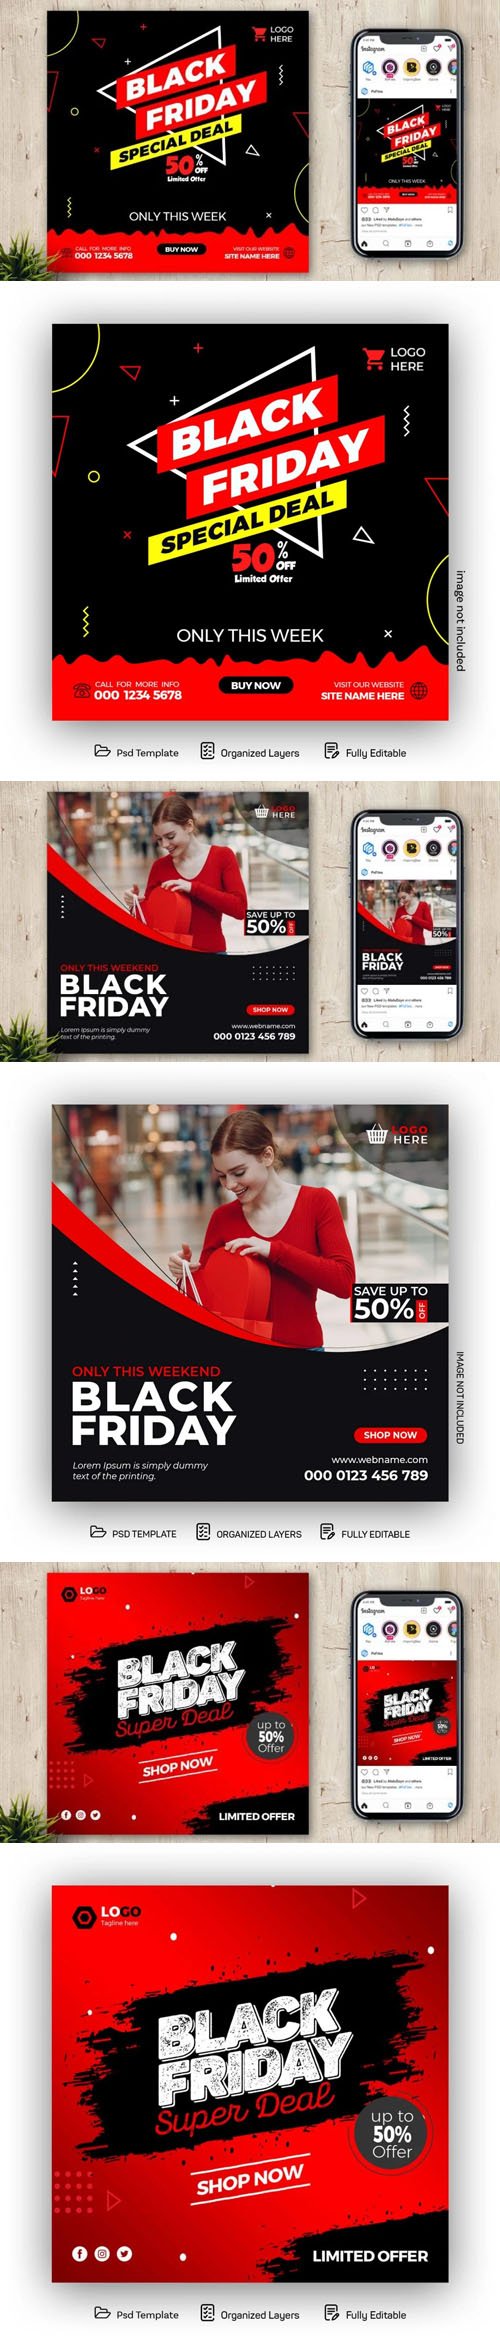 Black Friday Sales - 3 Social Media Posts PSD Templates